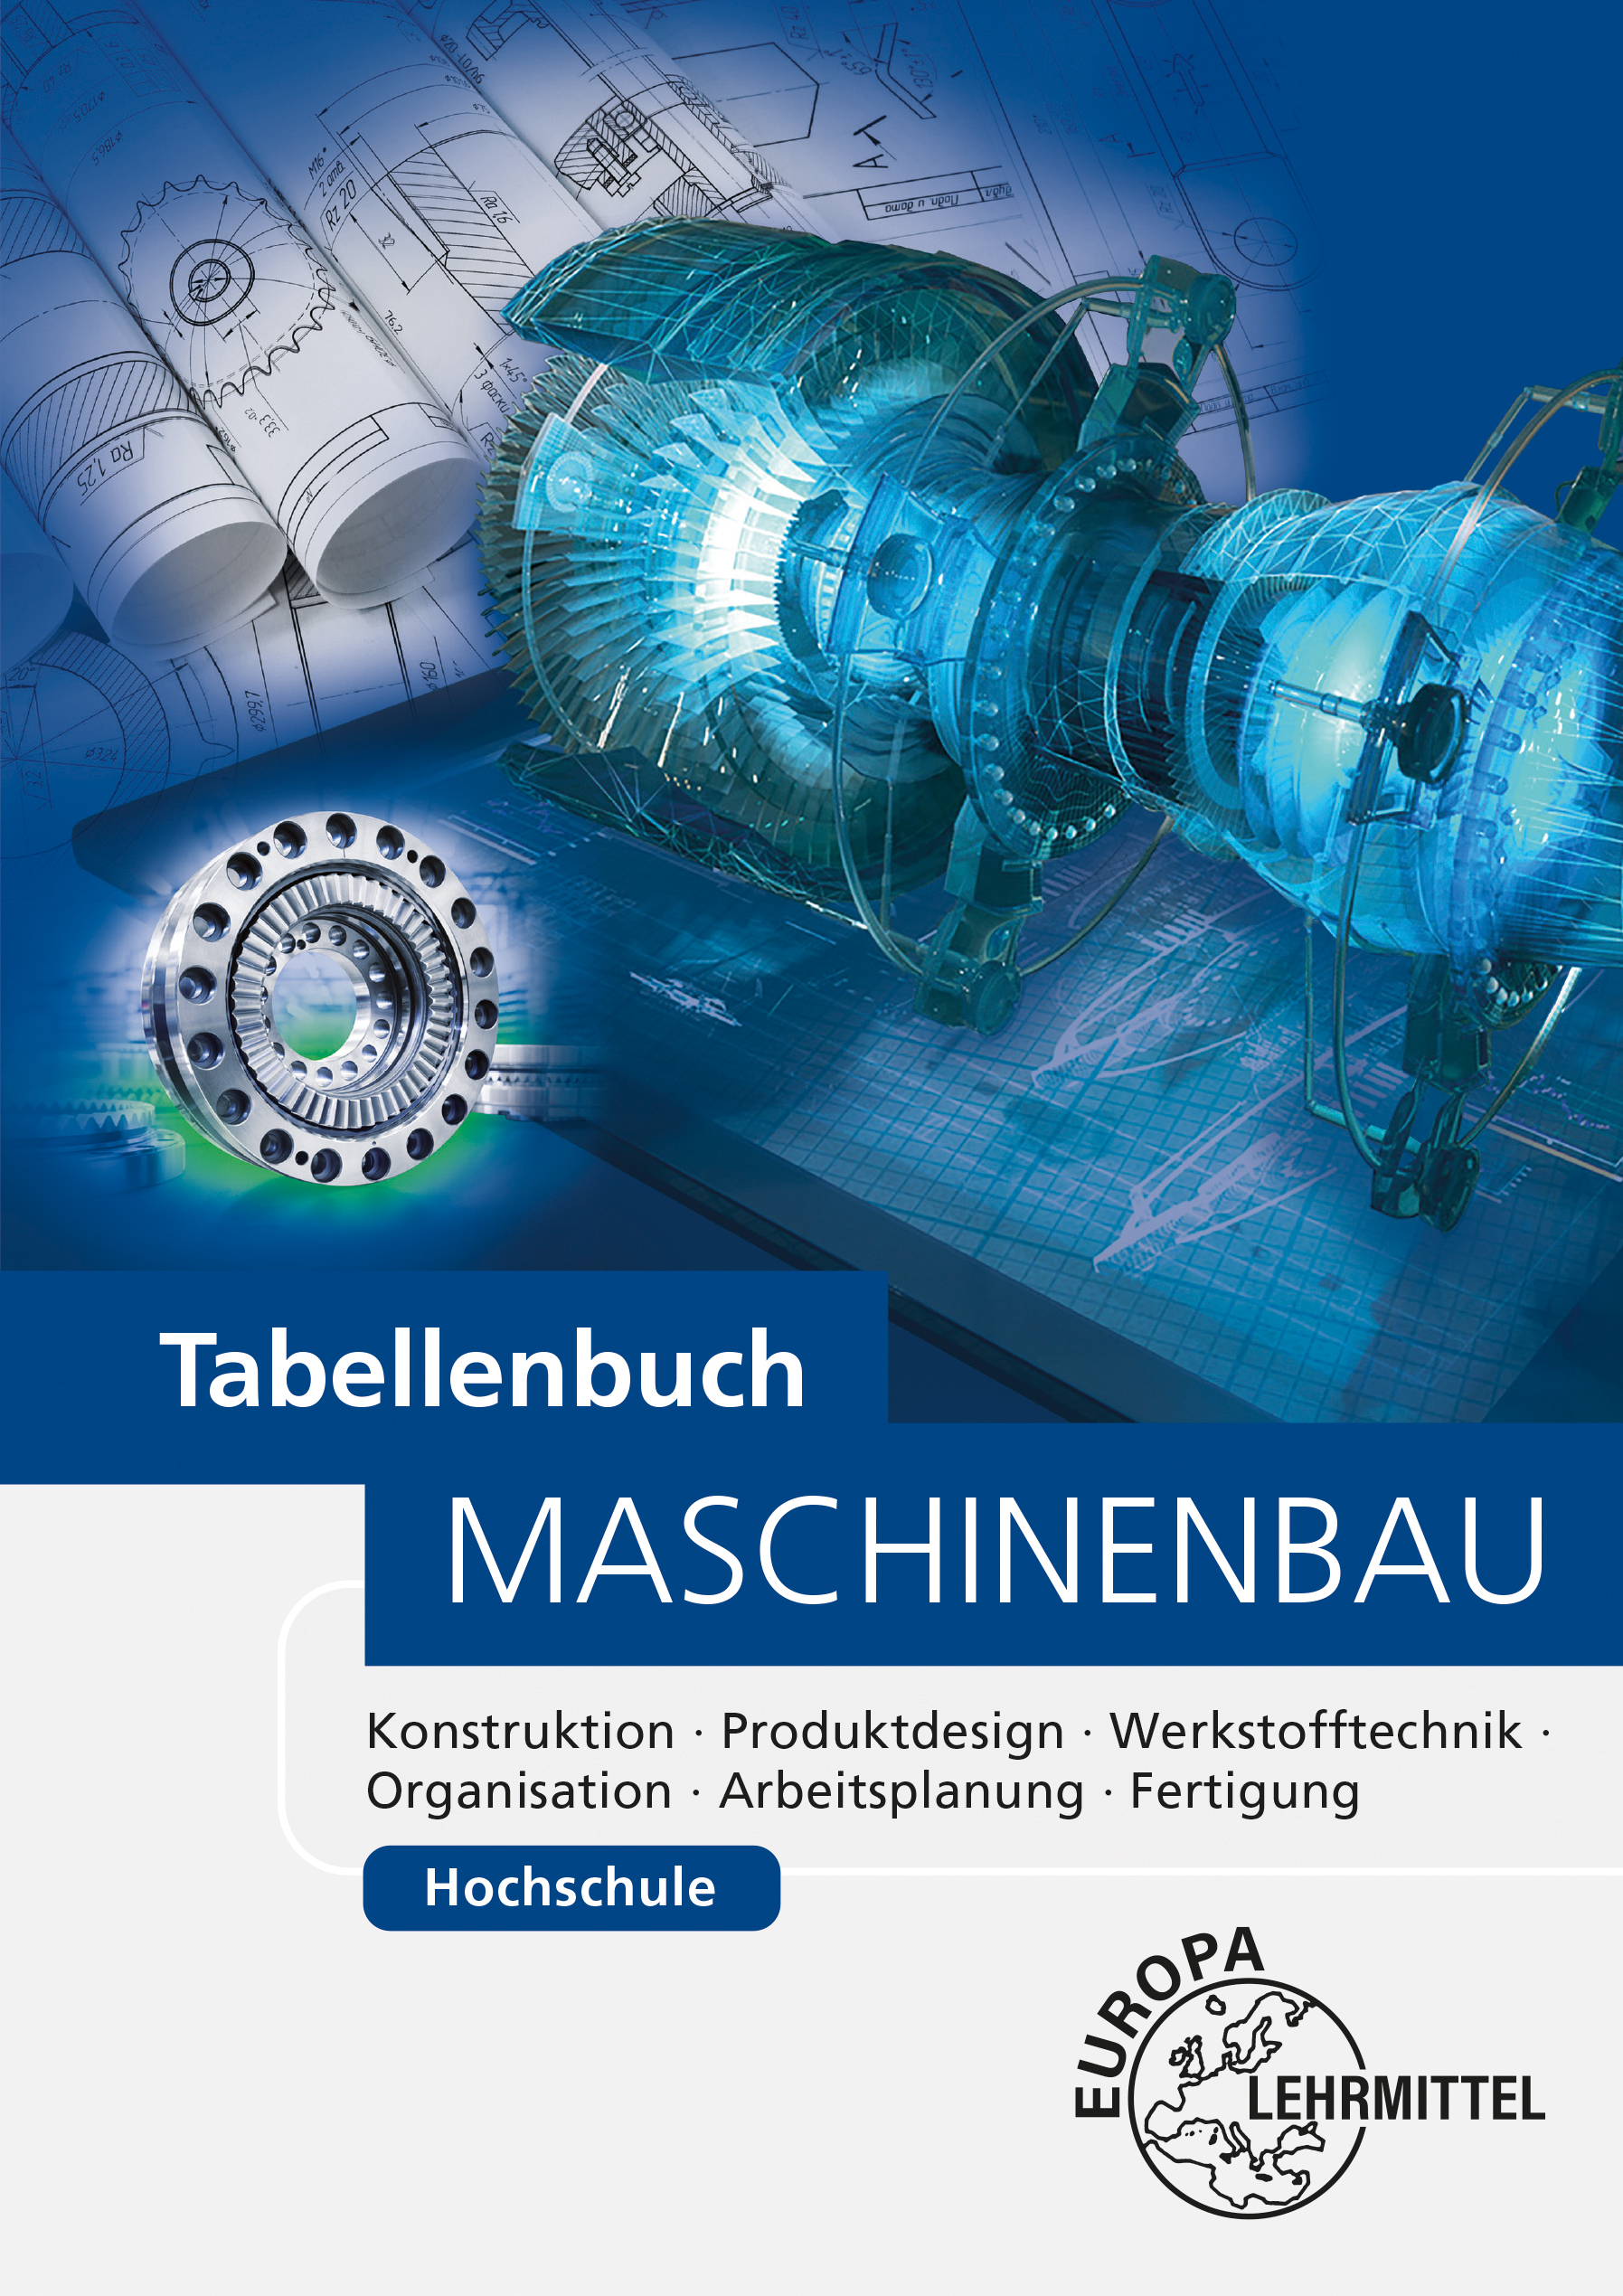 Tabellenbuch Maschinenbau Hochschule